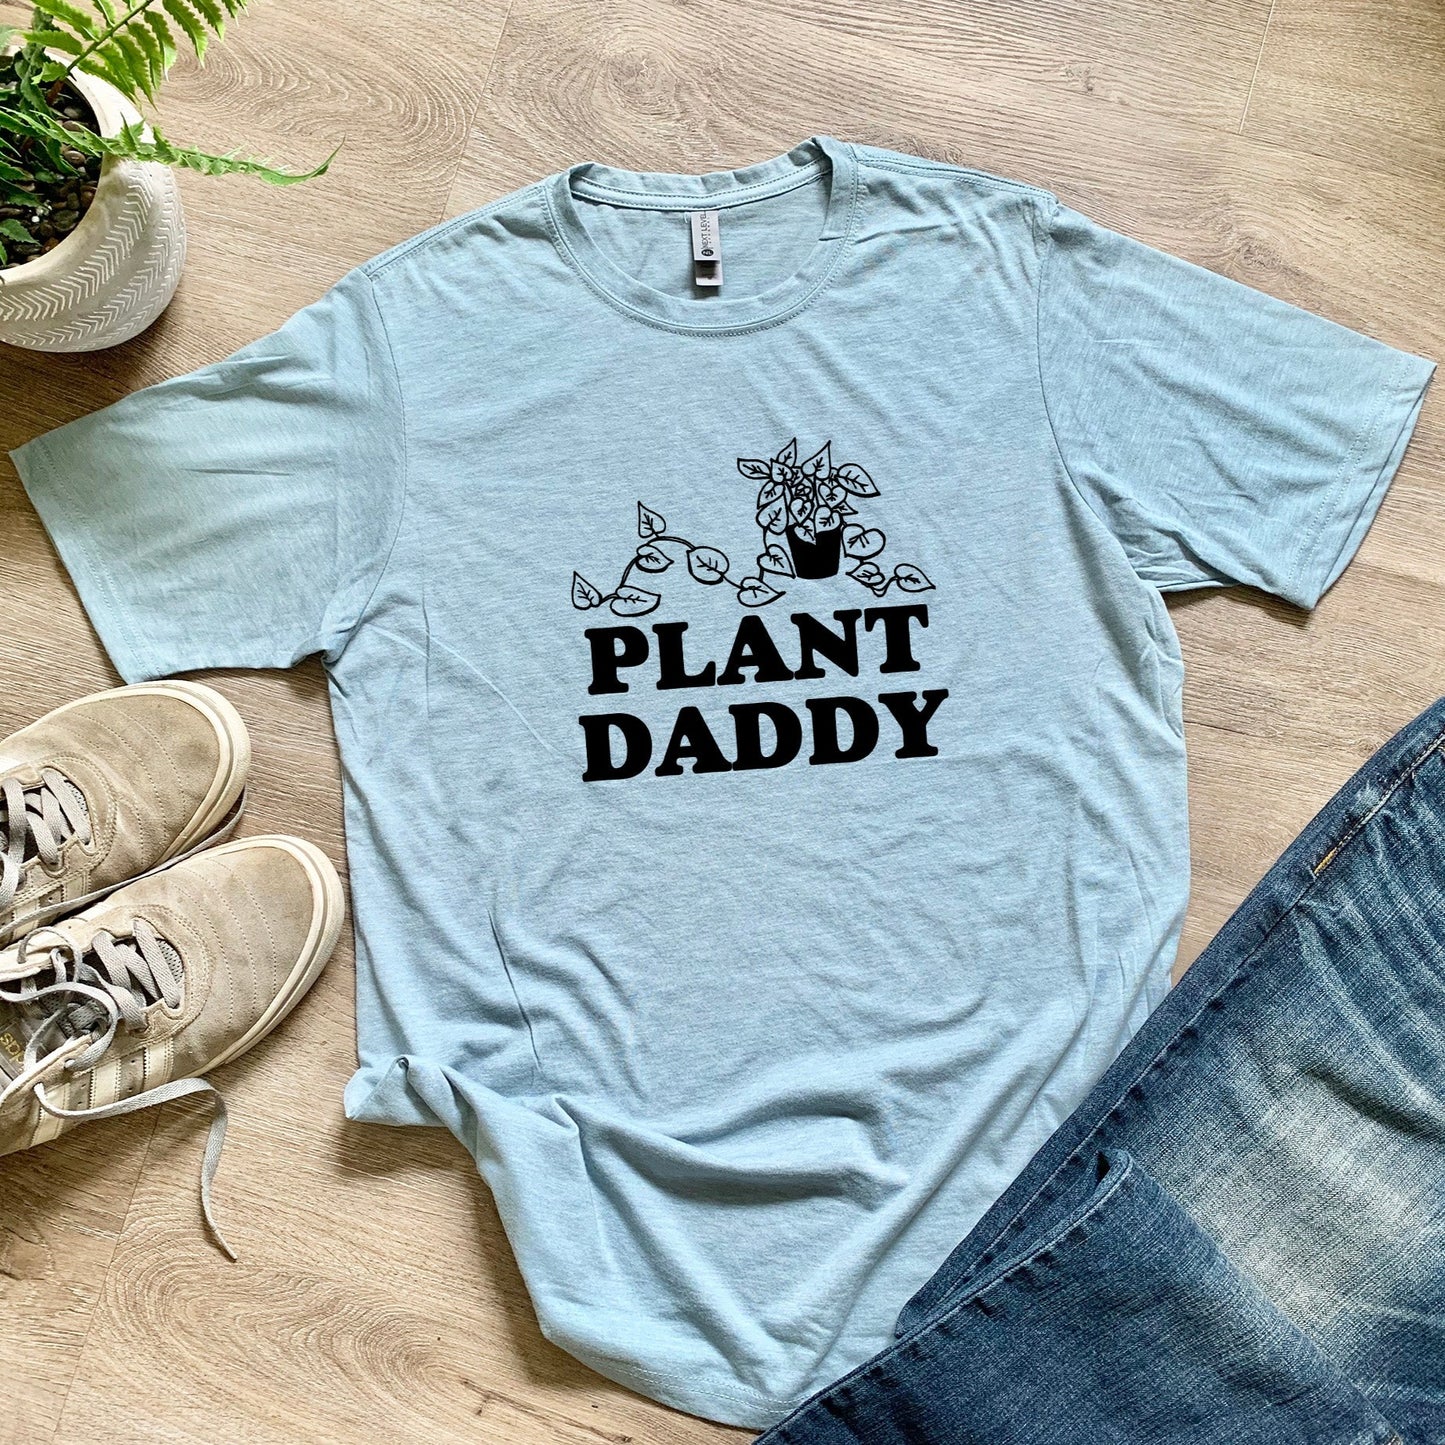 Plant Daddy - Men's / Unisex Tee - Stonewash Blue or Sage